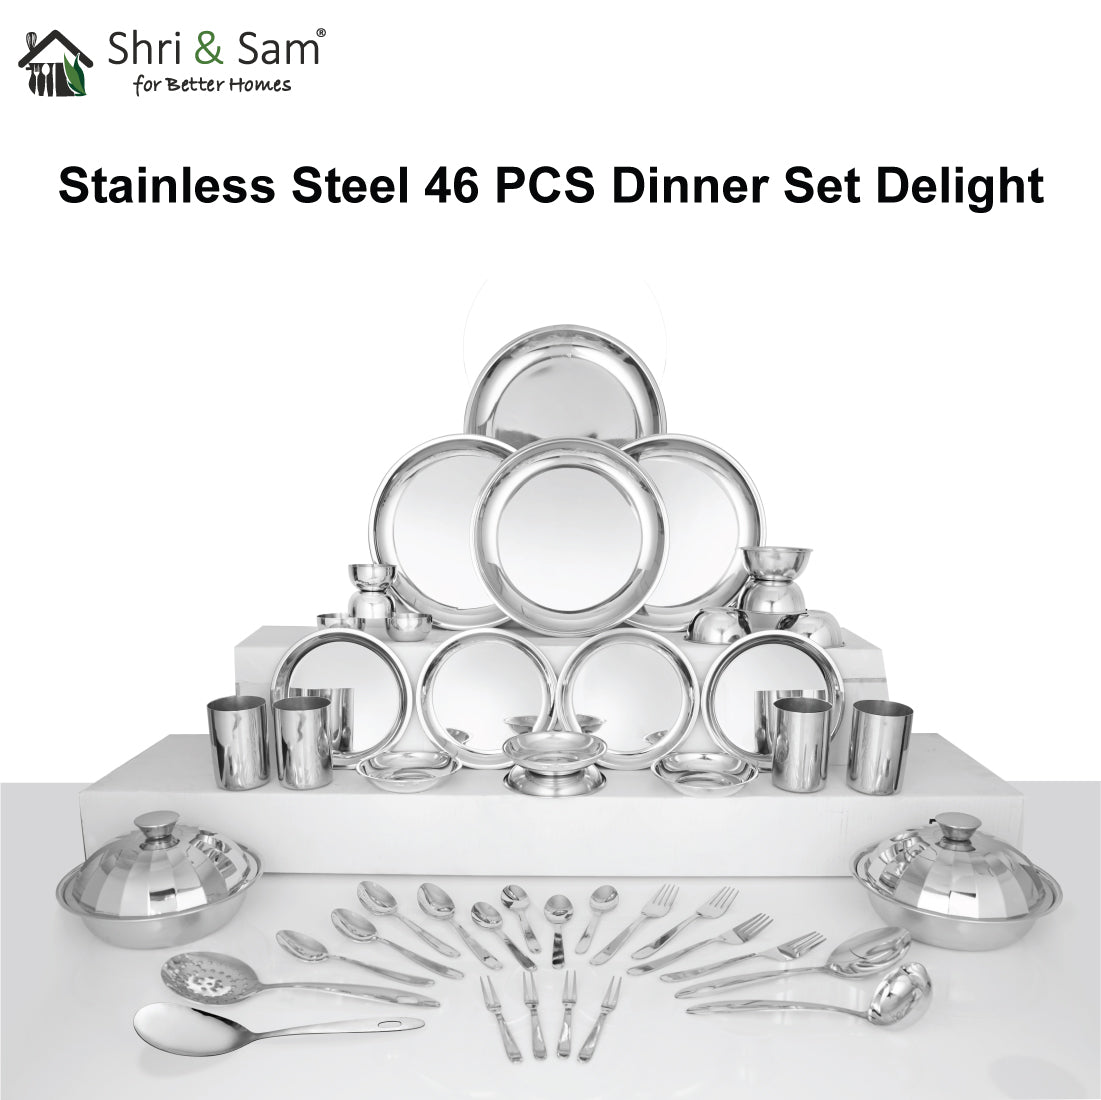 Stainless Steel 46 PCS Dinner set (4 People) Delight